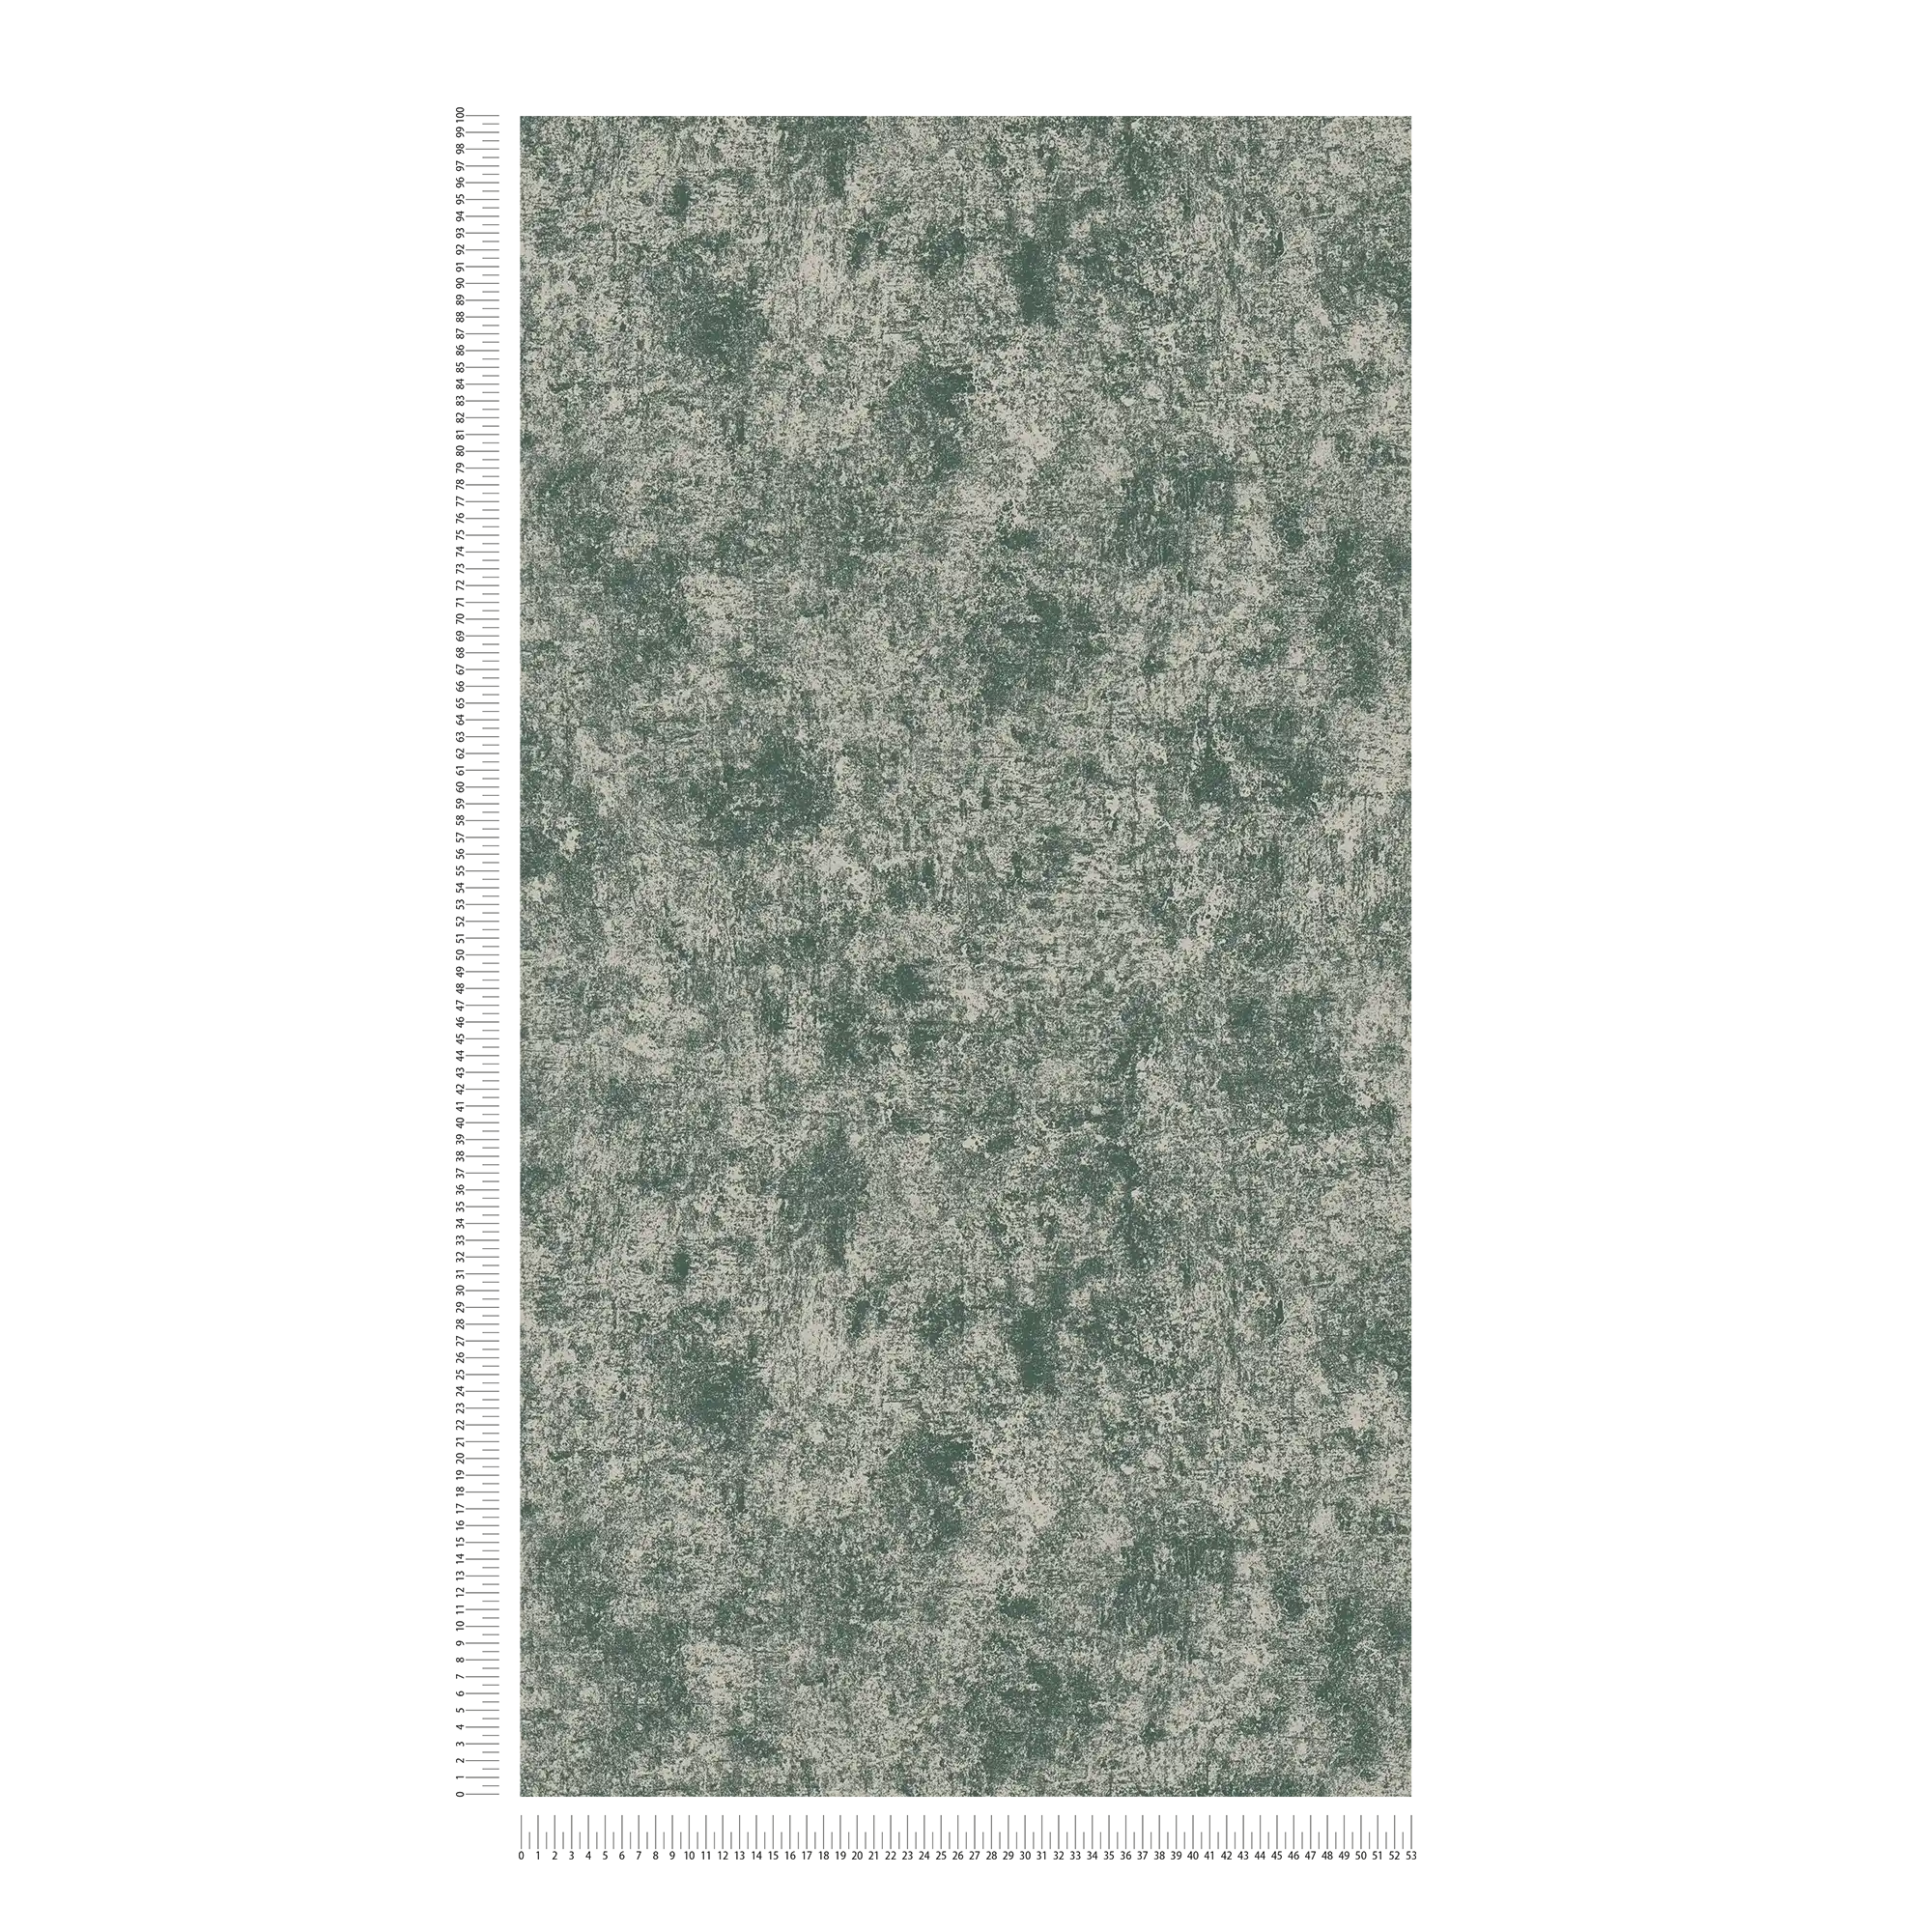             Carta da parati effetto metallo liscia lucida - verde, crema
        